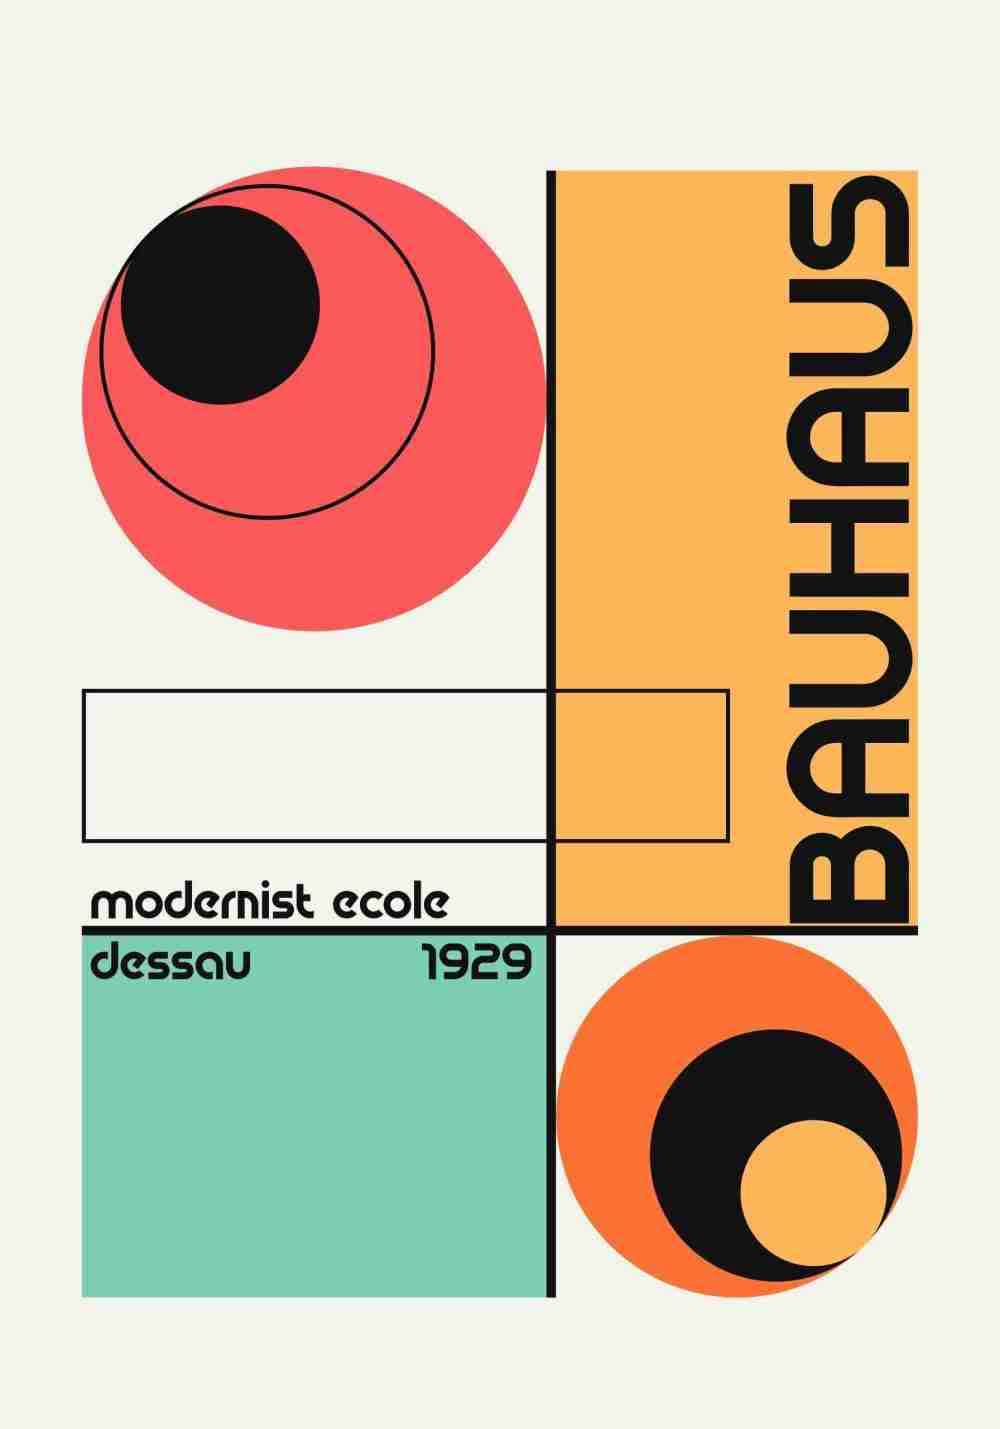 Bauhaus Modern Poster